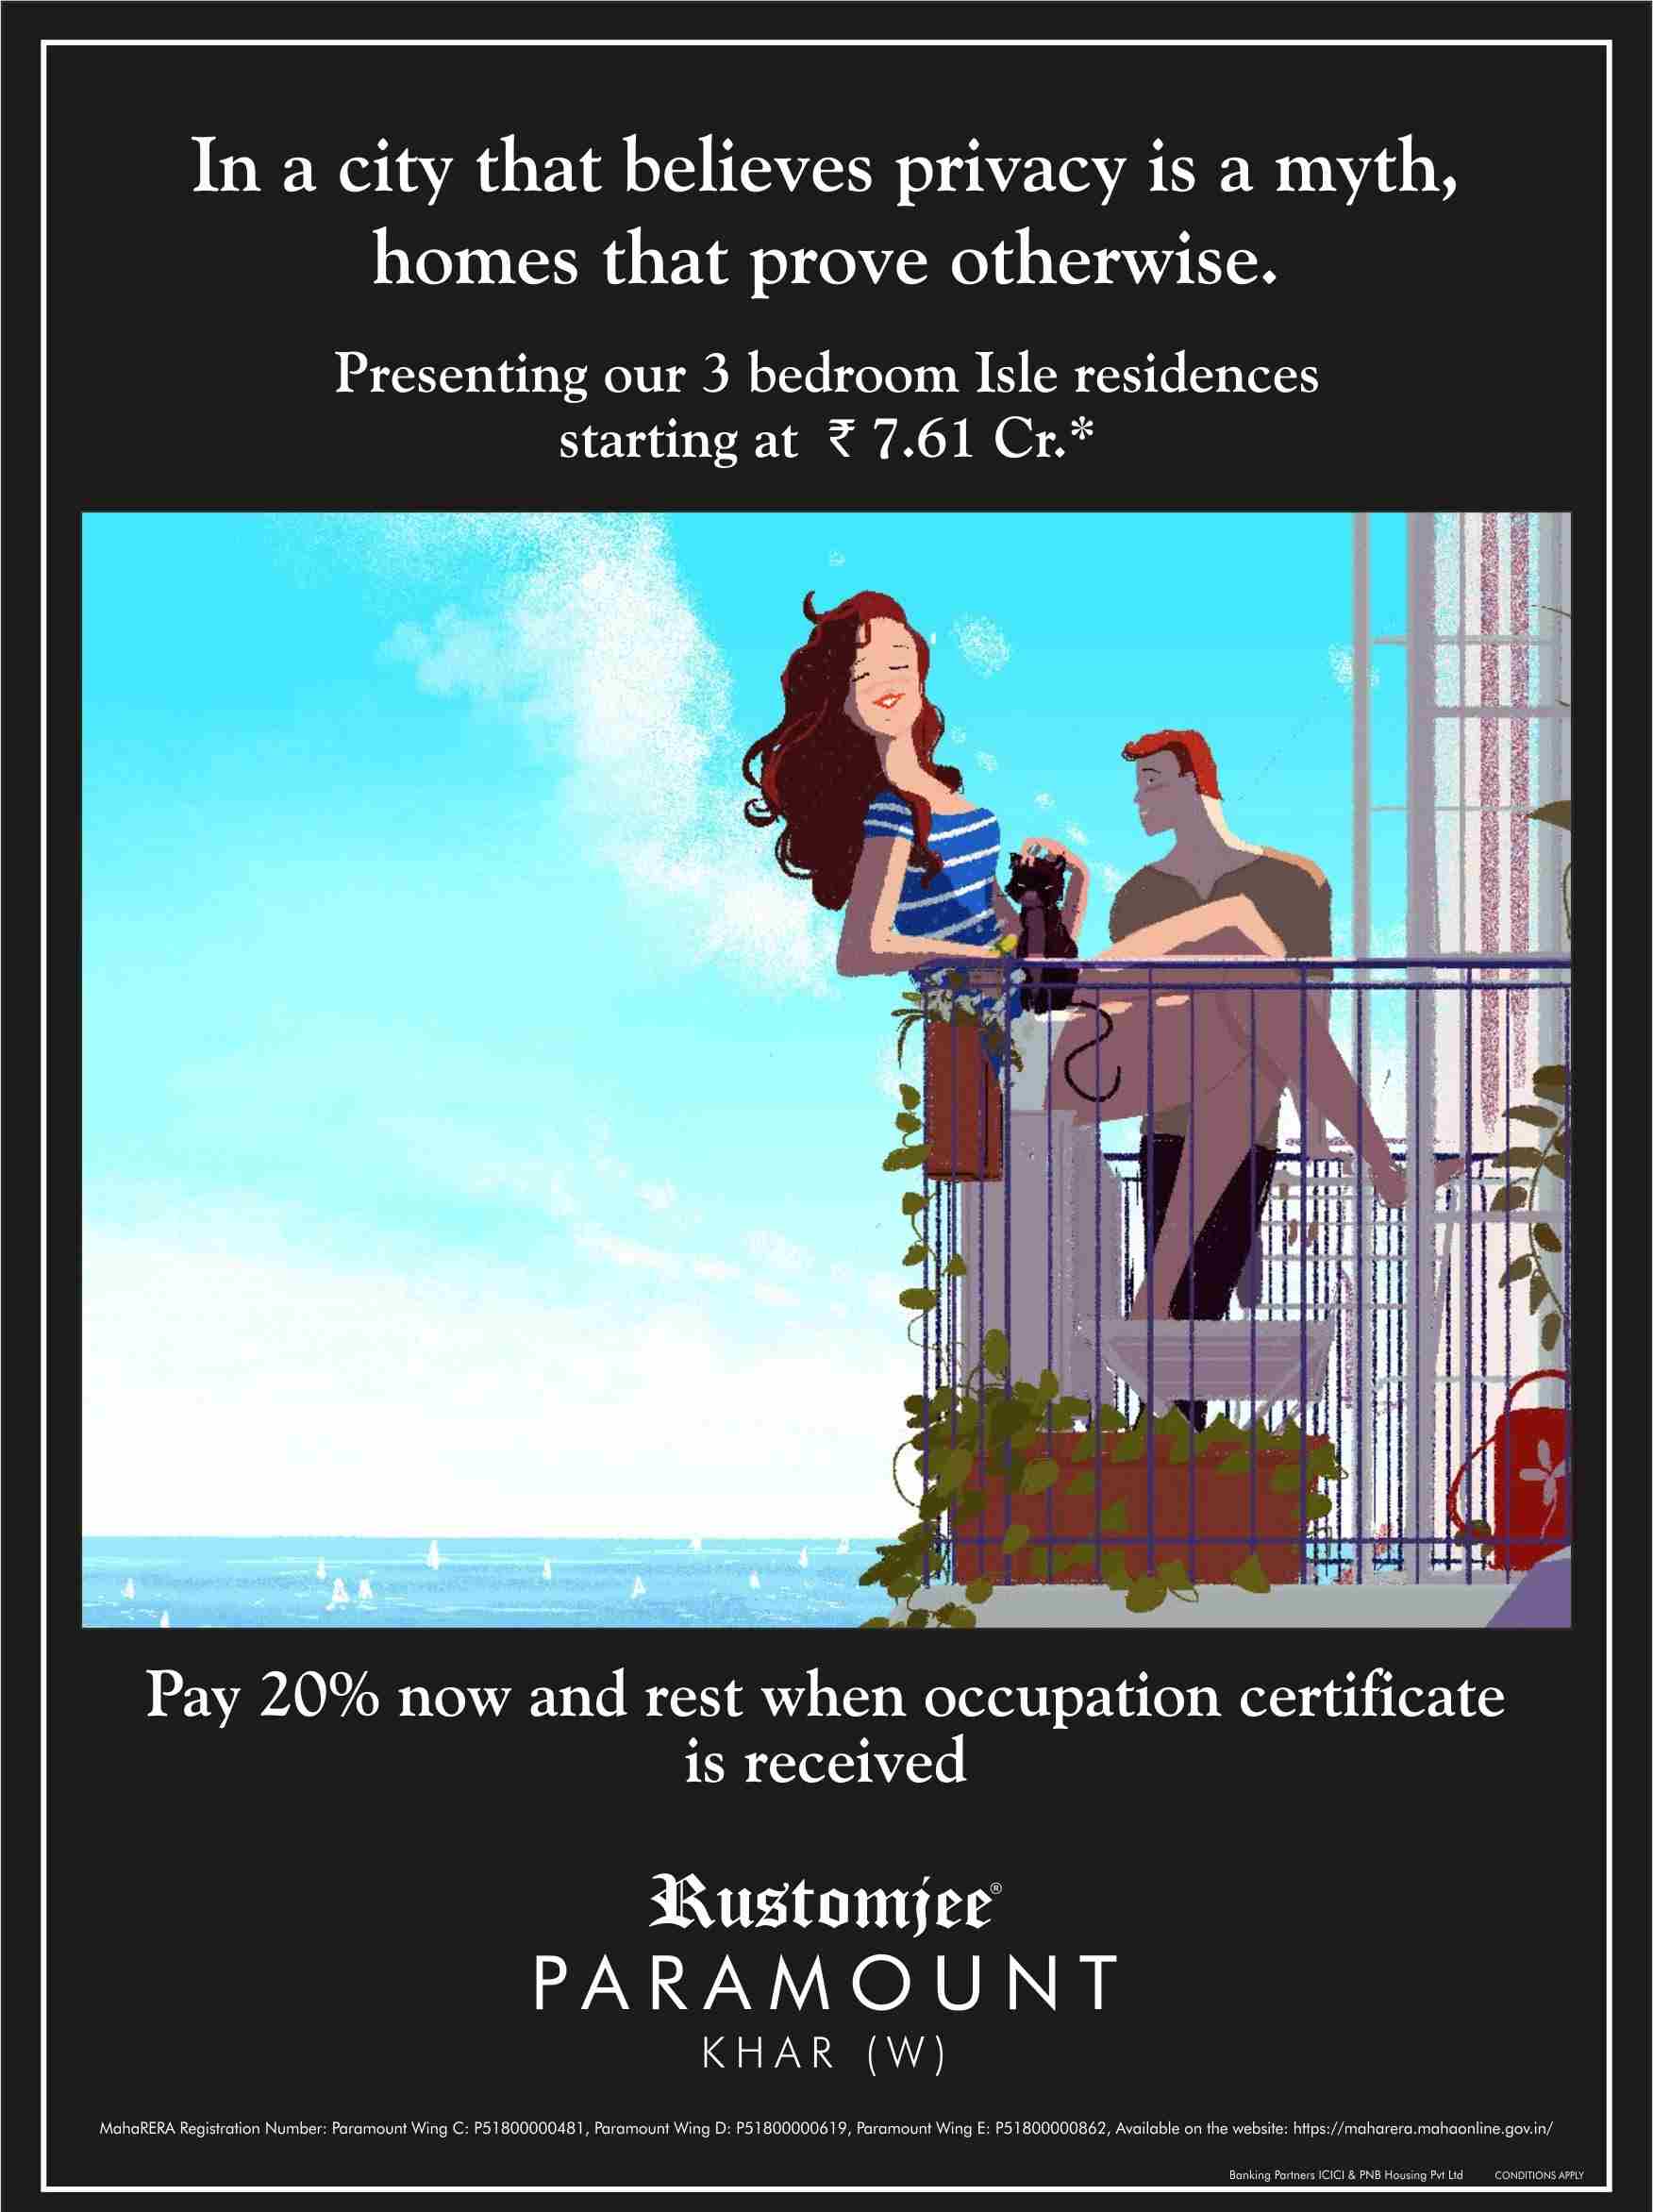 Presenting 3 bedroom Isle residences at Rustomjee Paramount in Mumbai Update